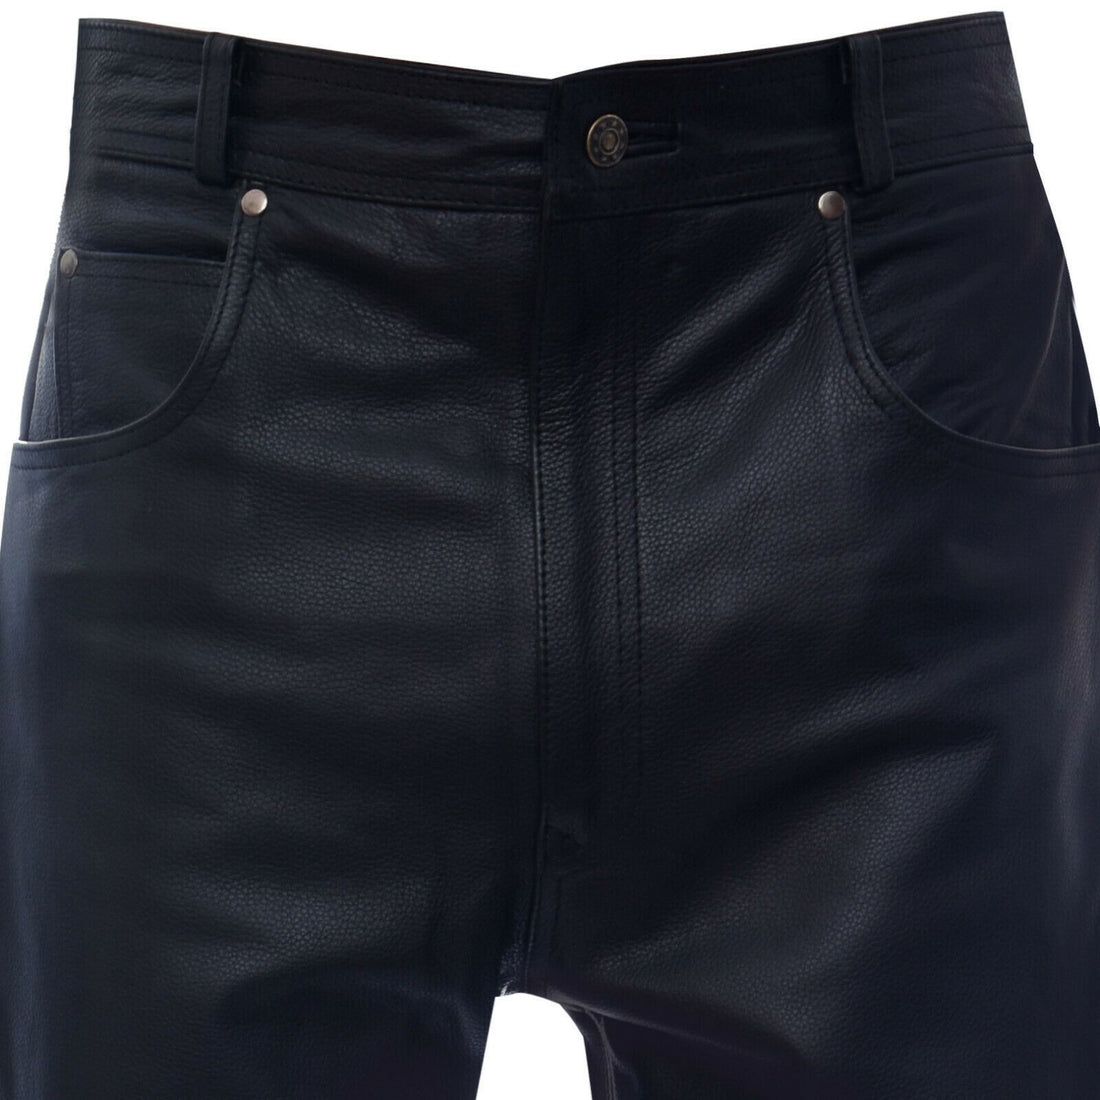 Mens Black Cowhide Leather Jeans-Hailsham - Upperclass Fashions 